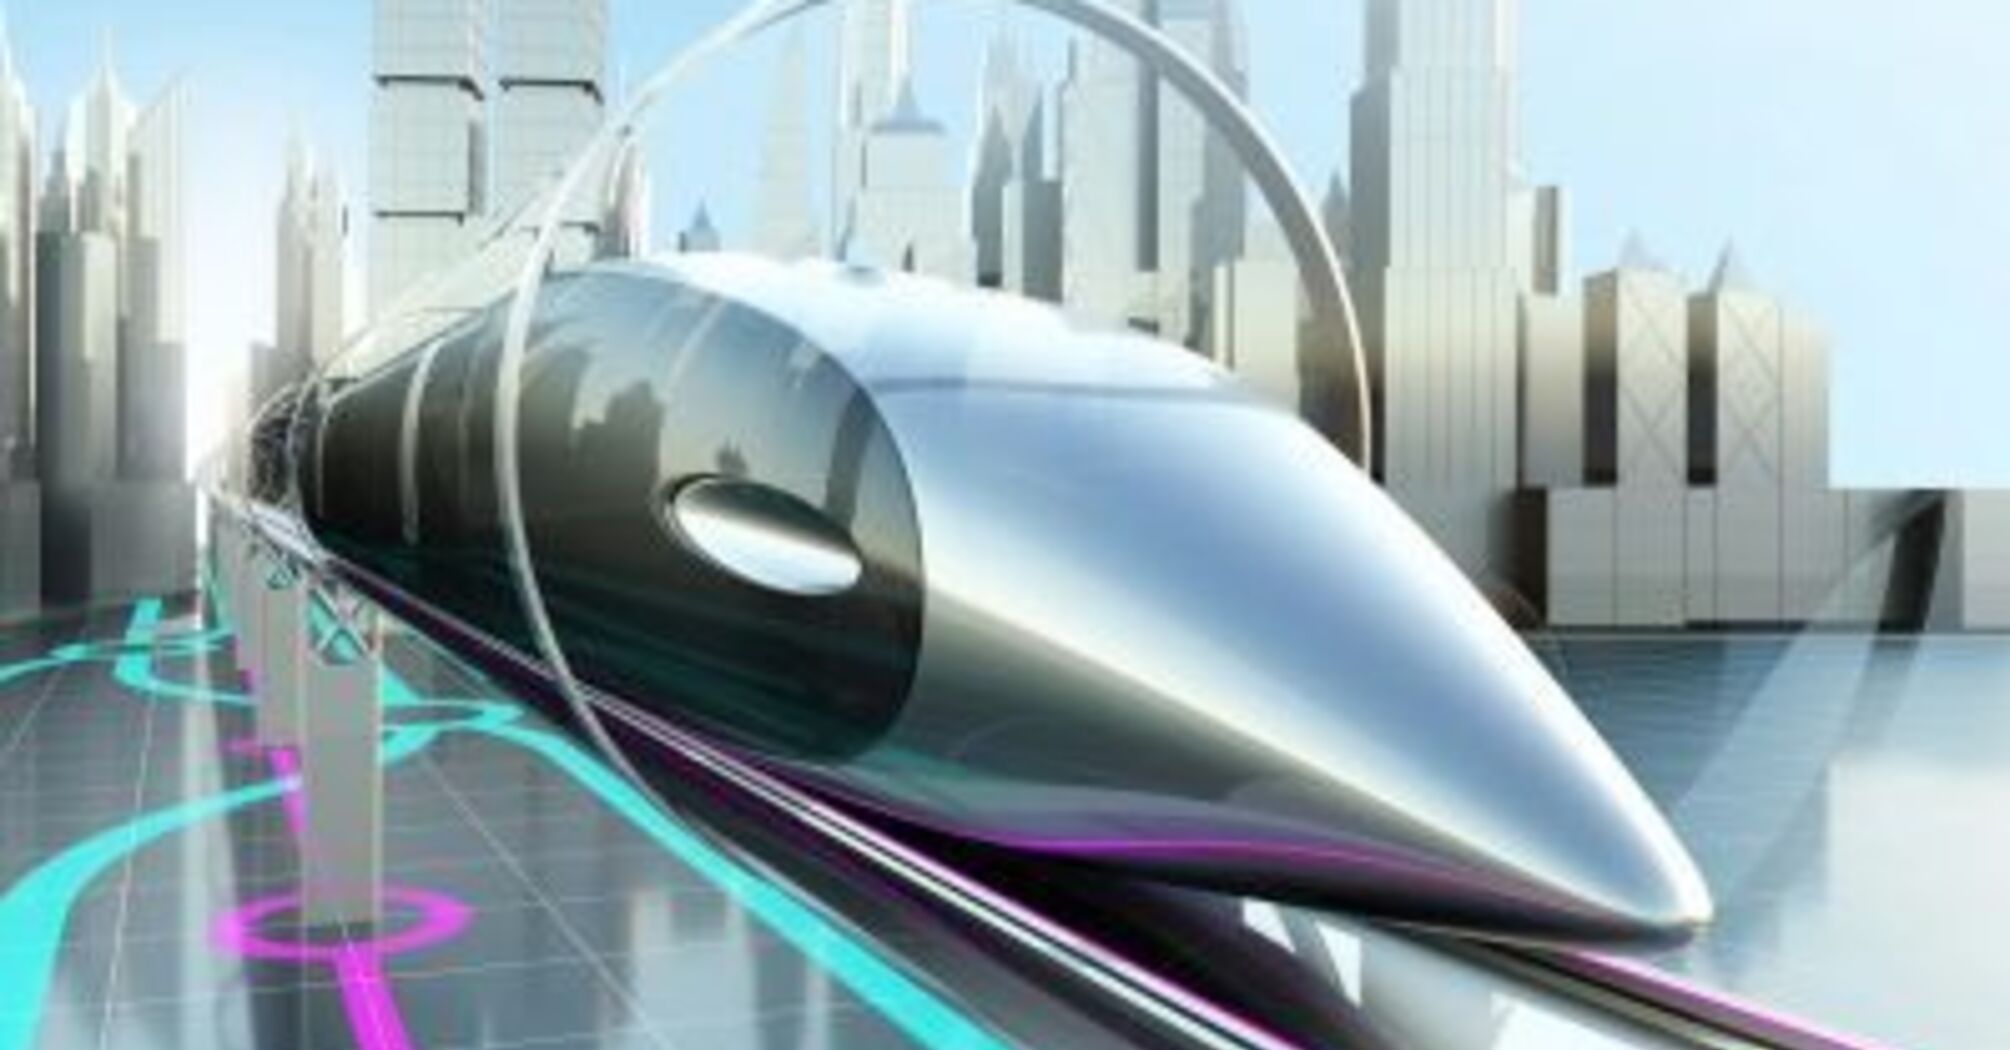 China's Hyperloop floating train